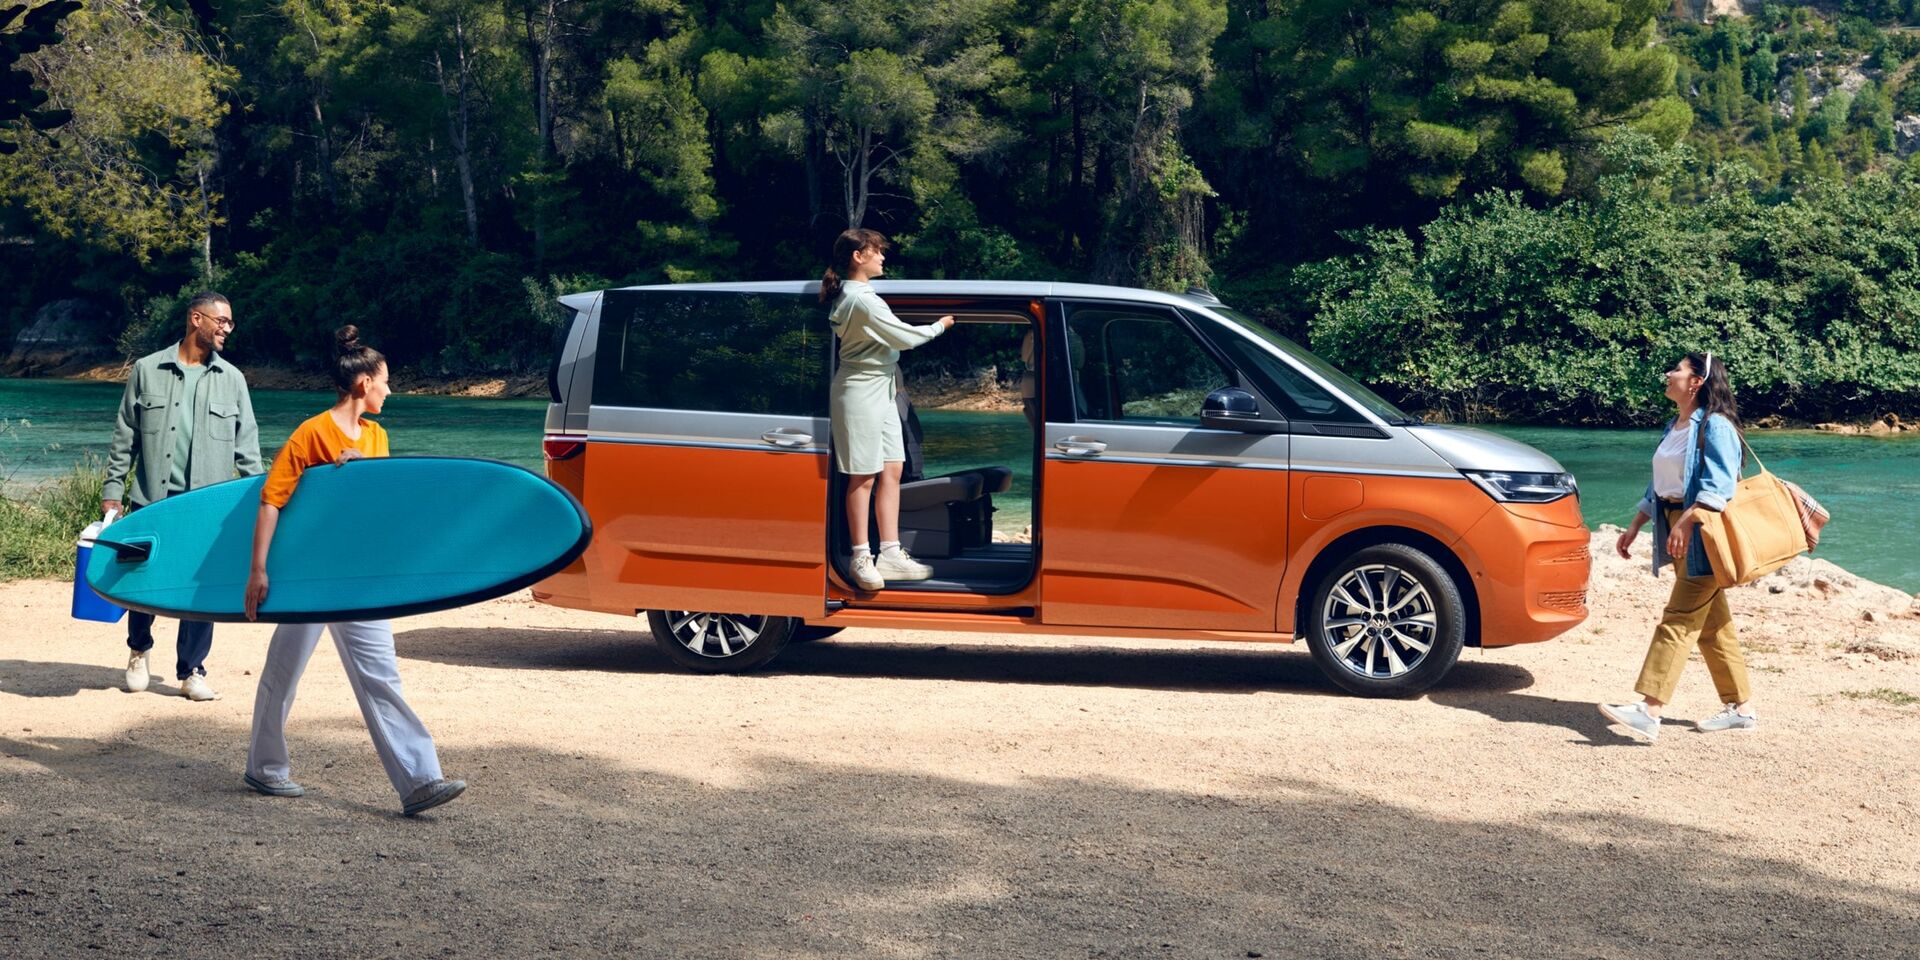 Uma família estaciona o seu VW Multivan Energetic numa praia fluvial.